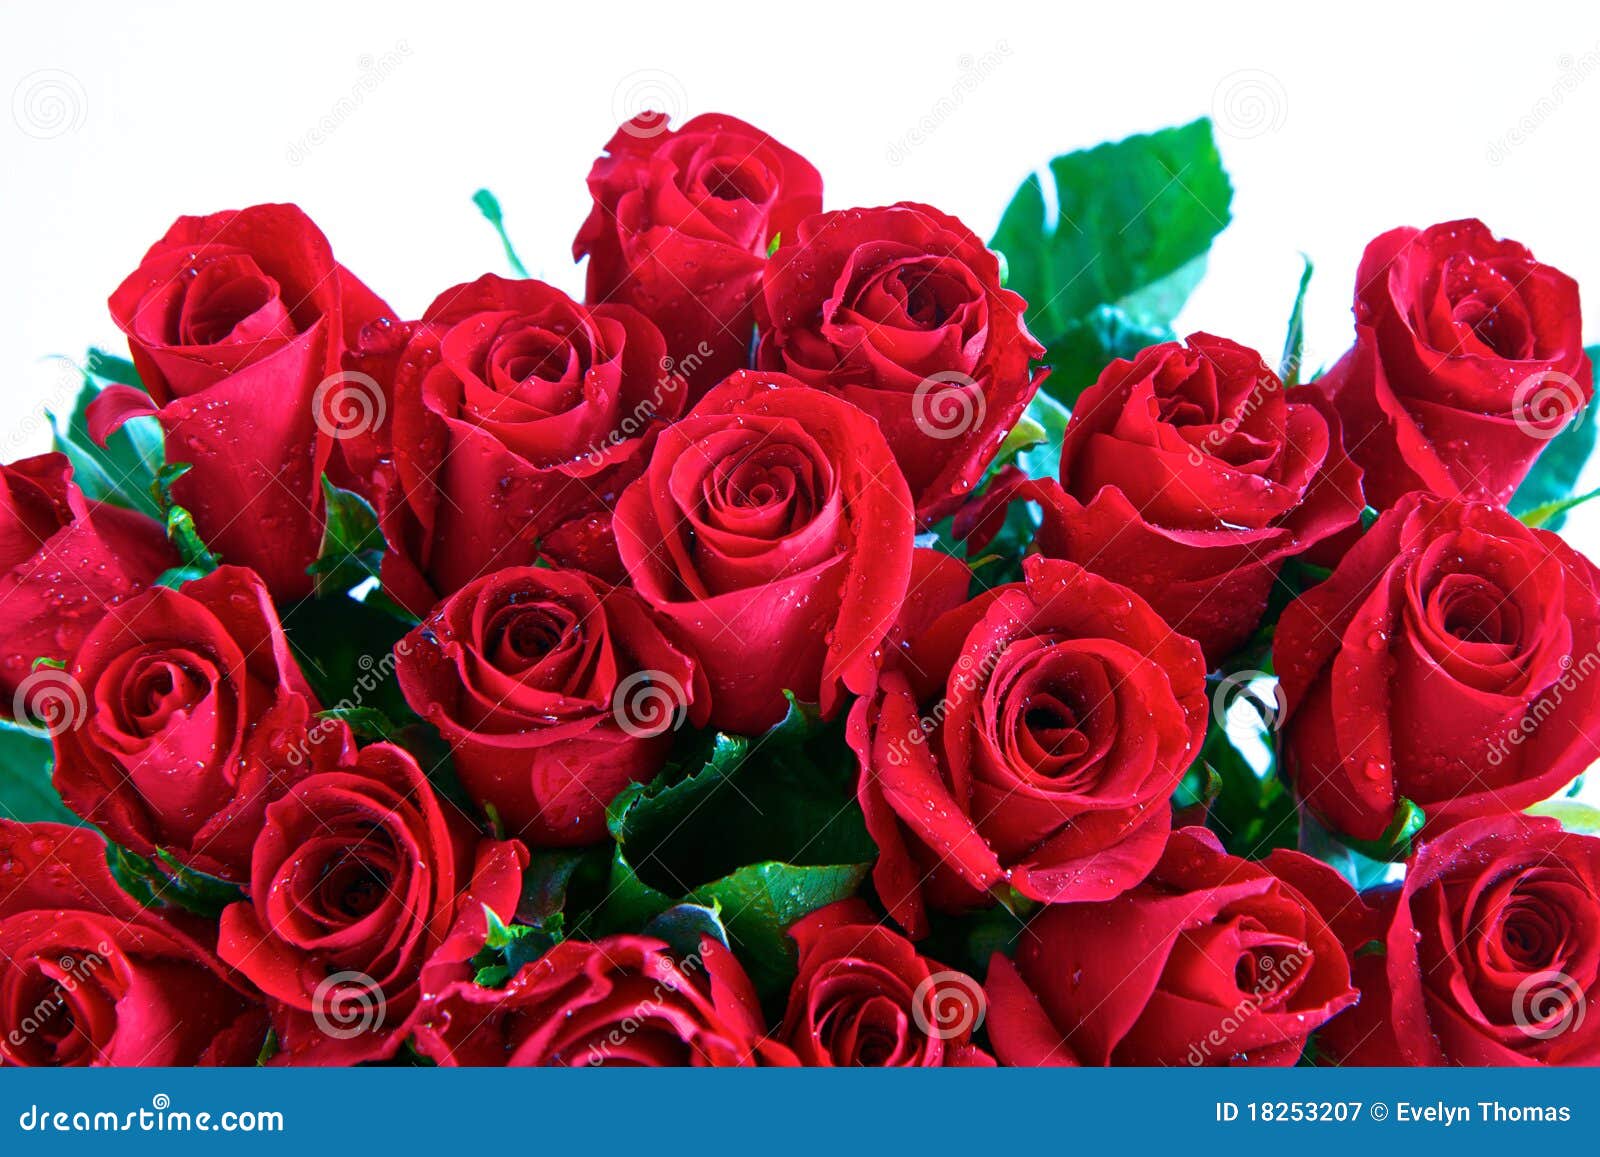 clipart rose rosse - photo #48